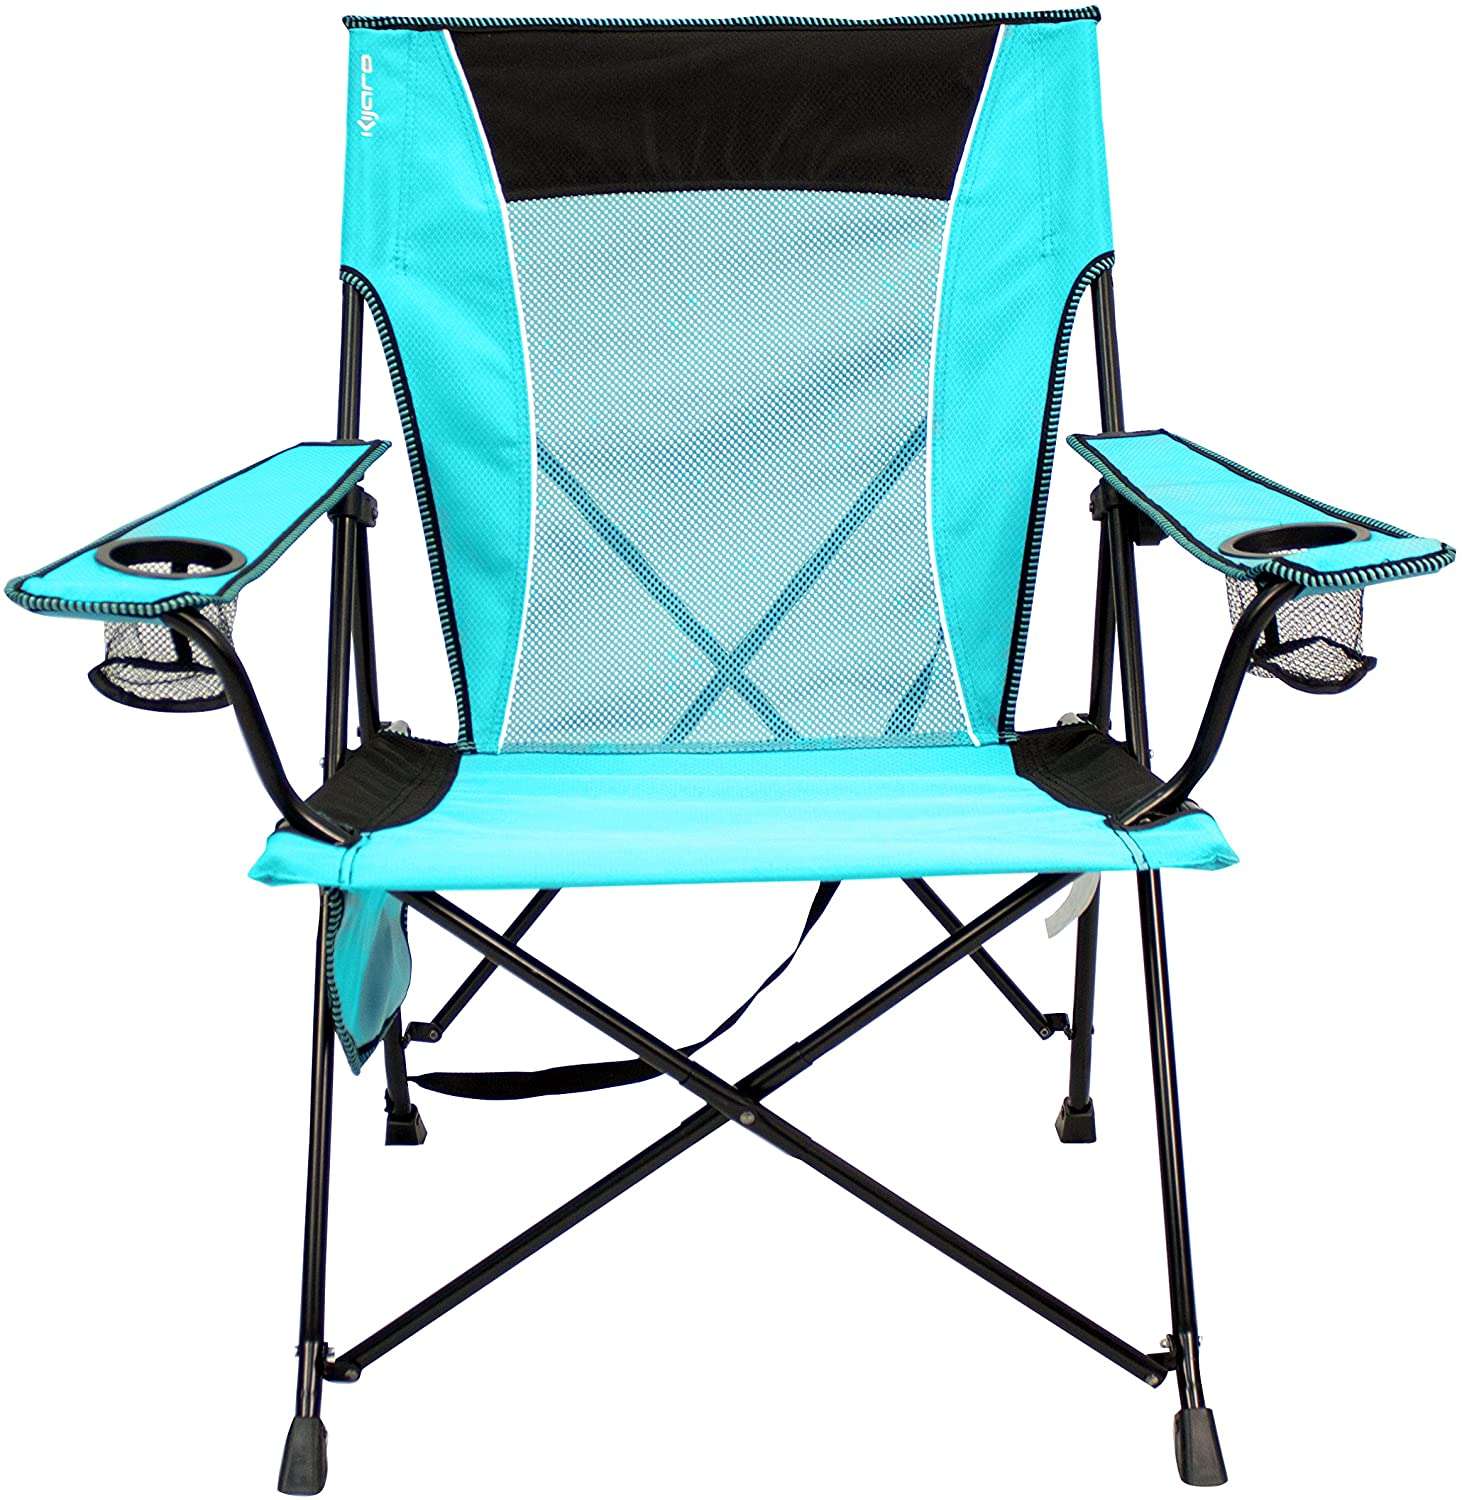 Kijaro Dual Lock Portable Camping and Sports Chair ...